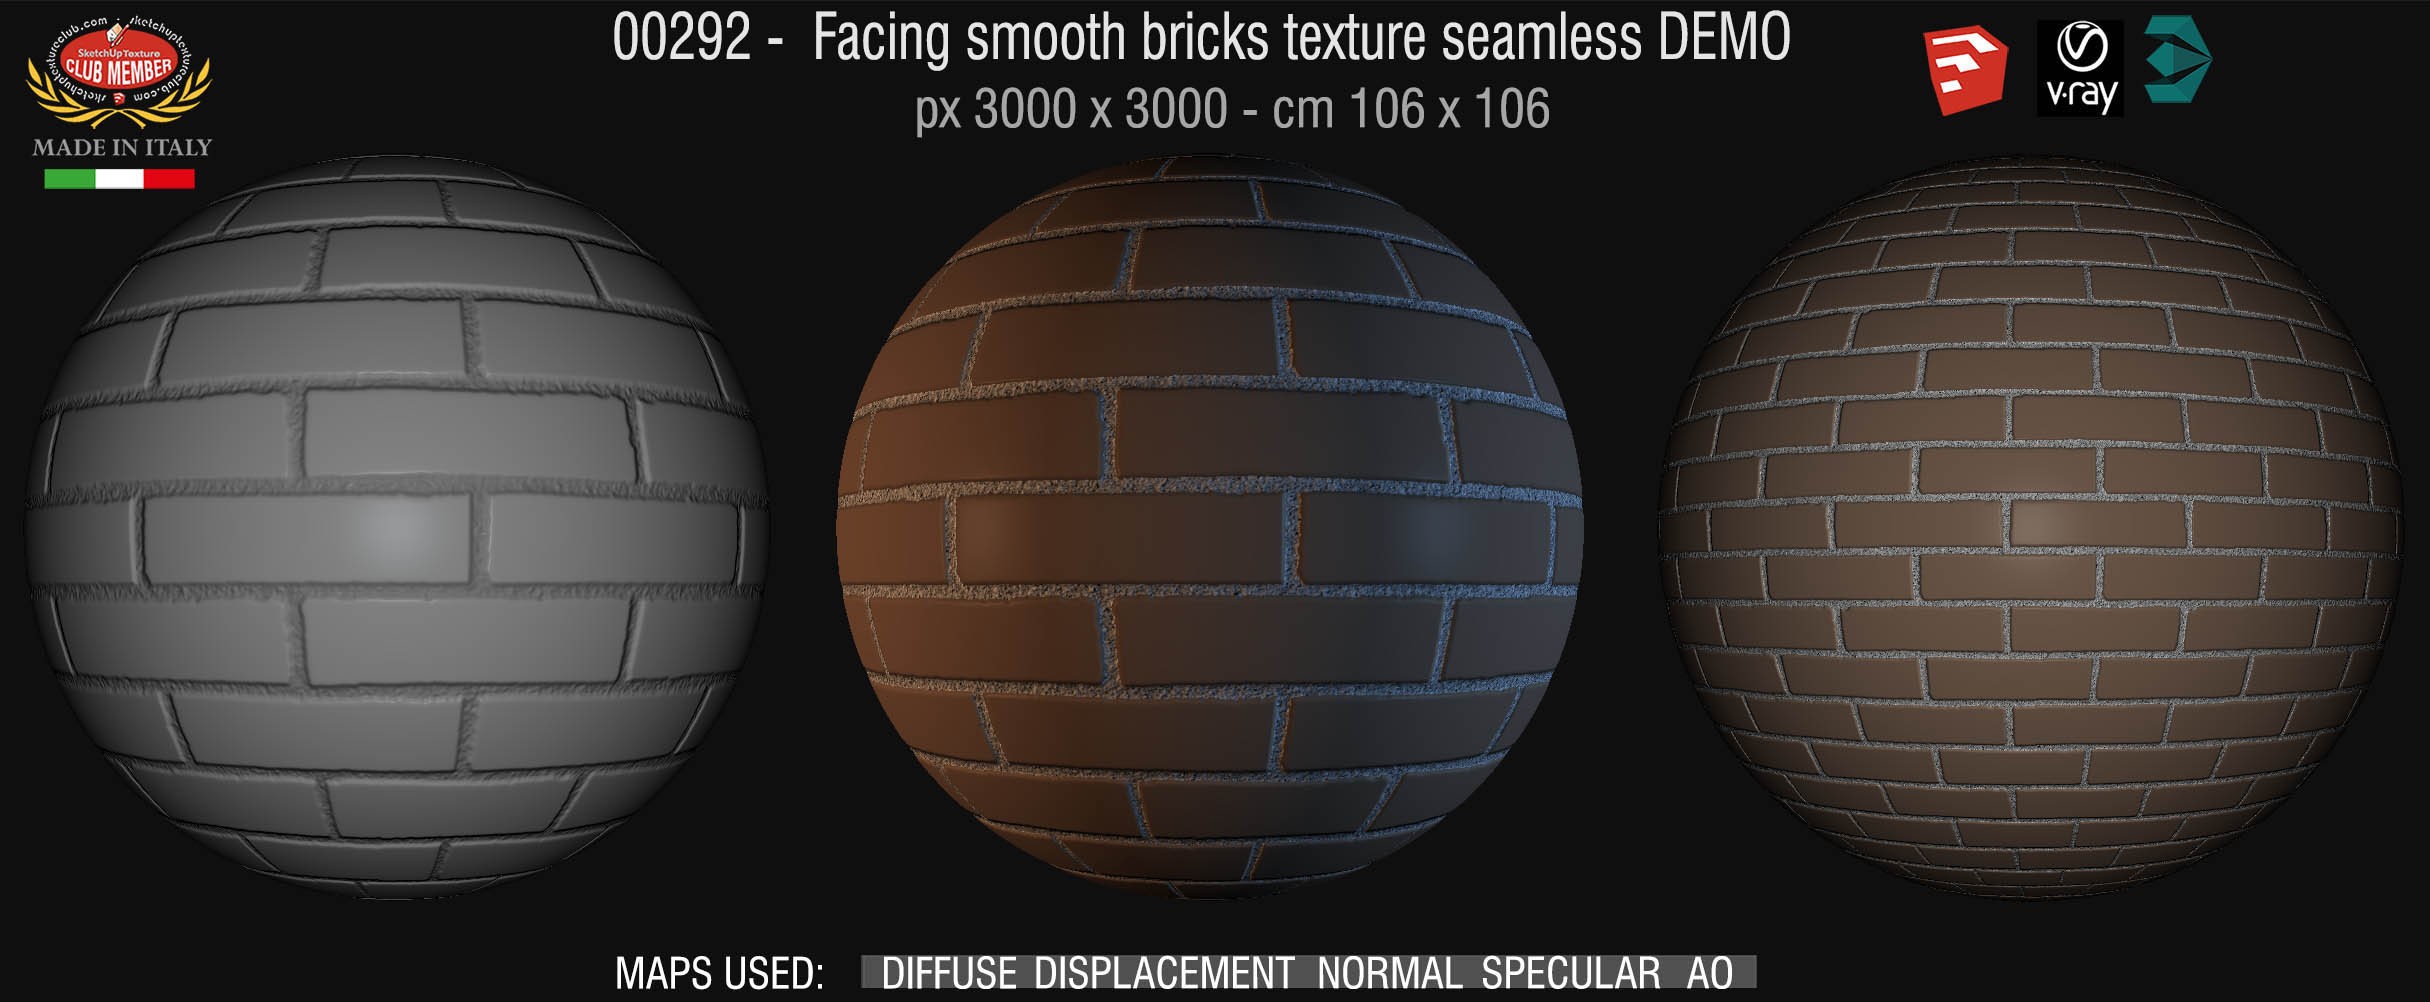 00292 Facing smooth bricks texture seamless + maps DEMO